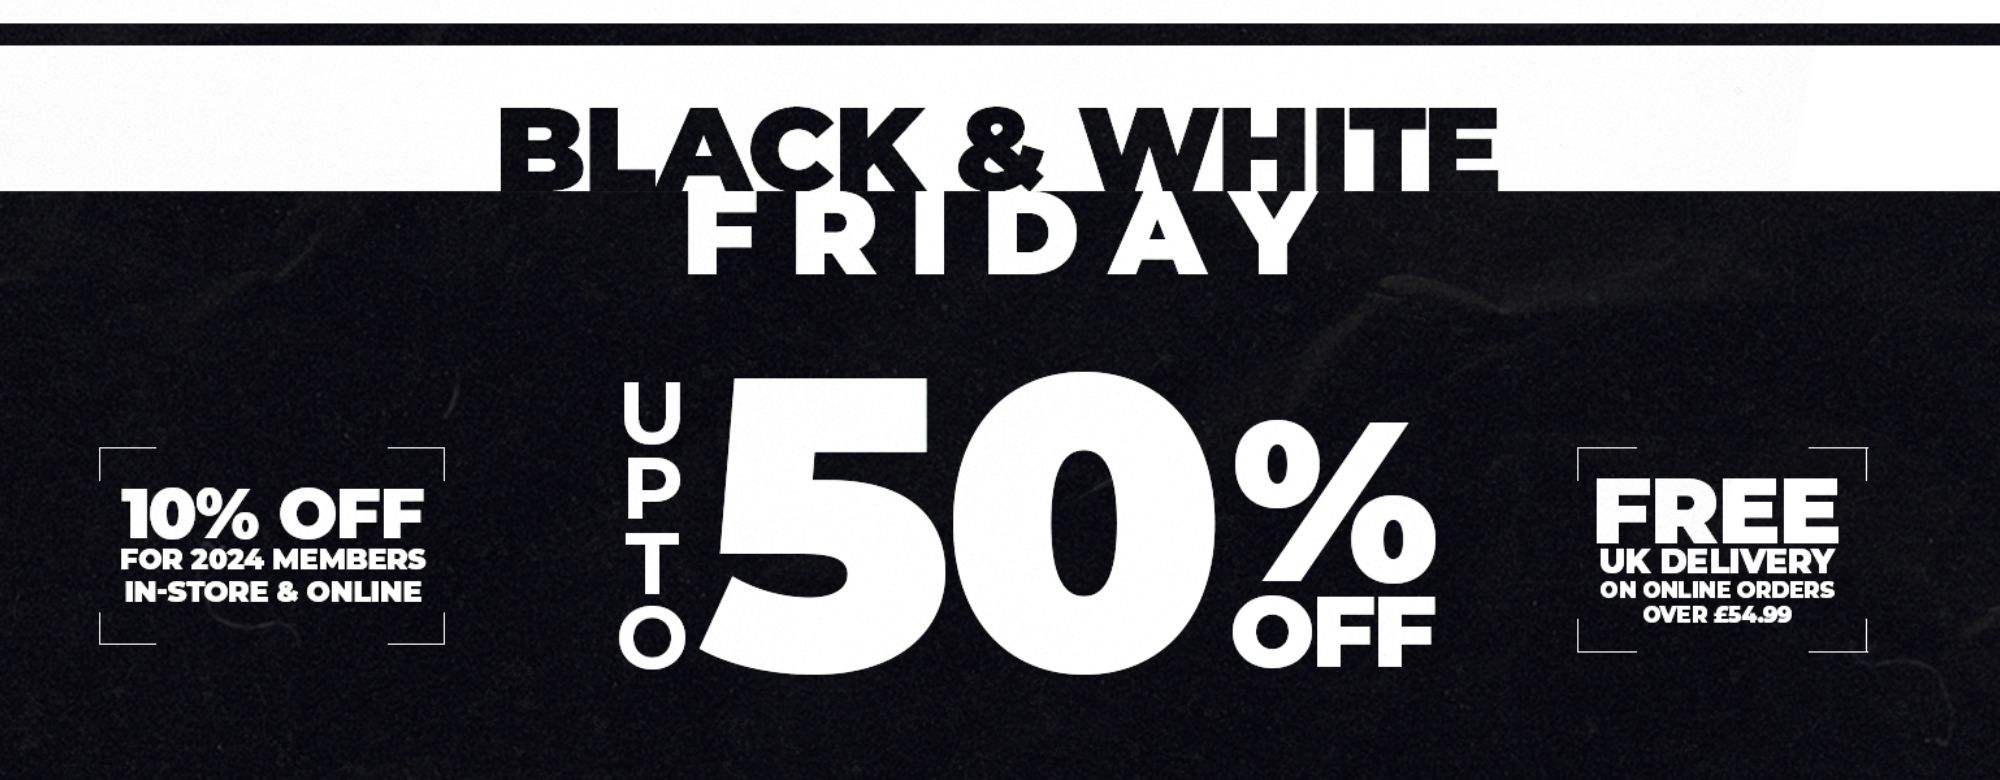 Huge Discounts Across Black & White Friday Weekend! - Hull FC News